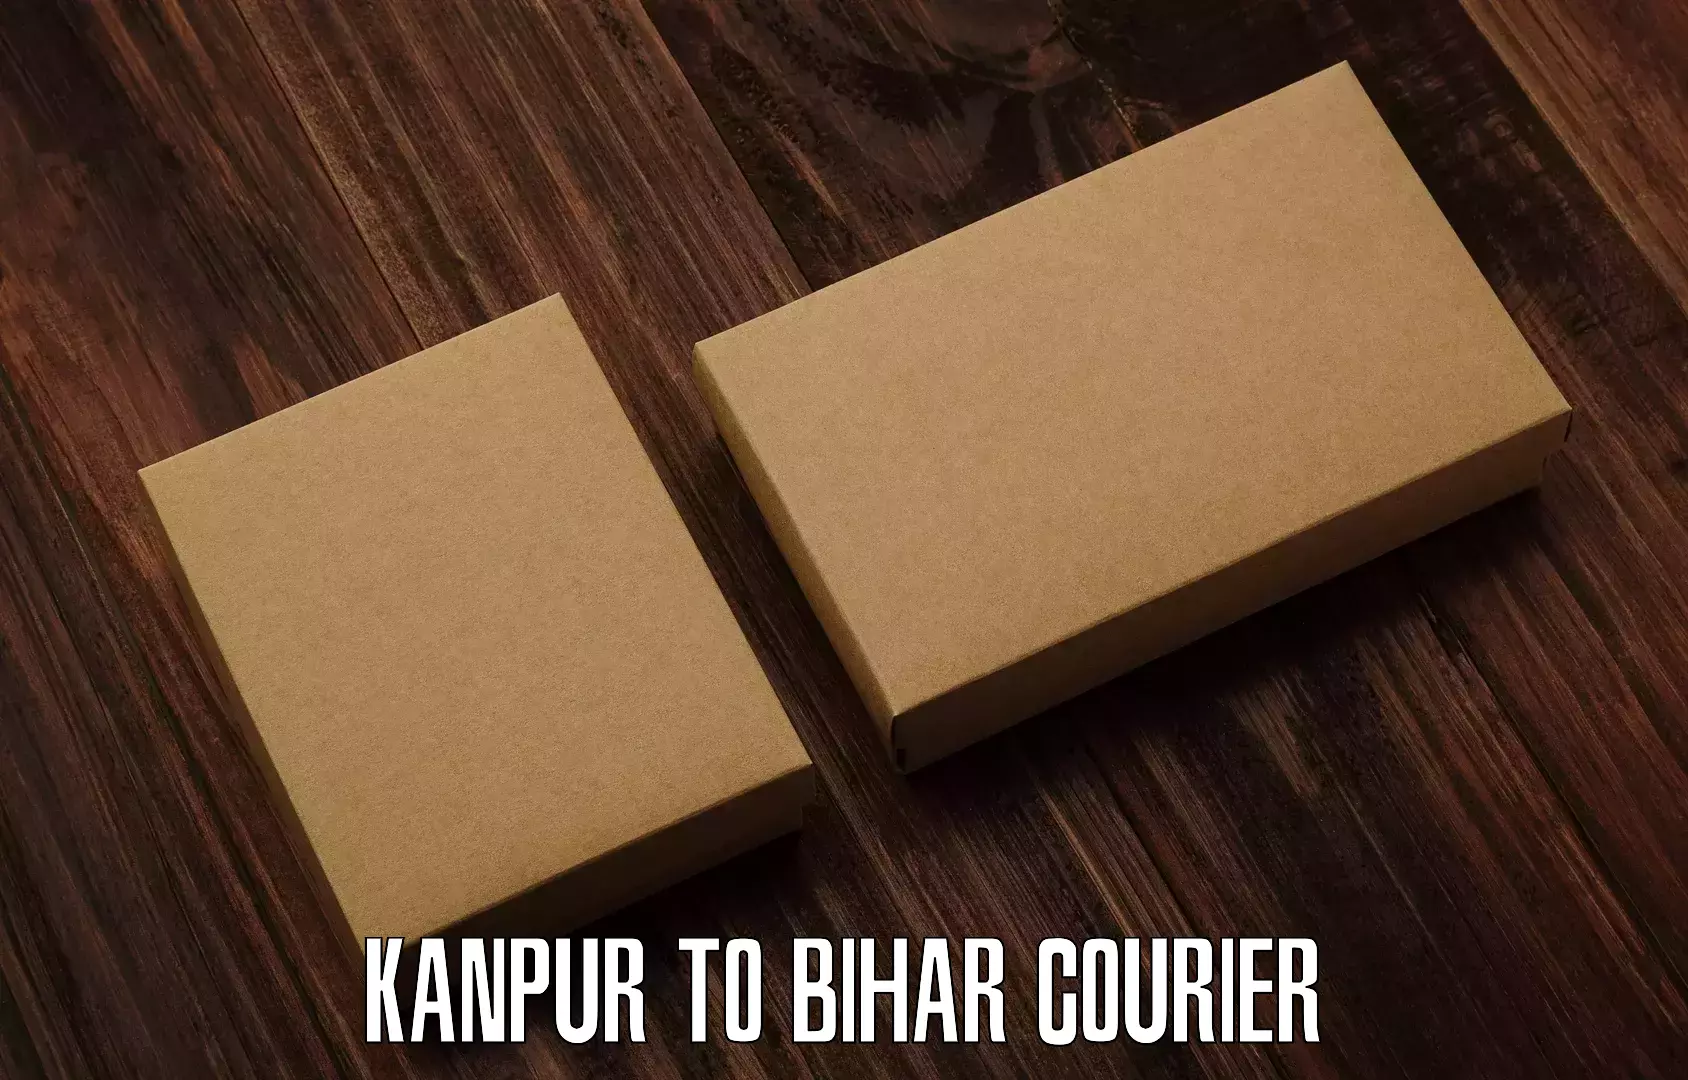 User-friendly delivery service Kanpur to Aurangabad Bihar